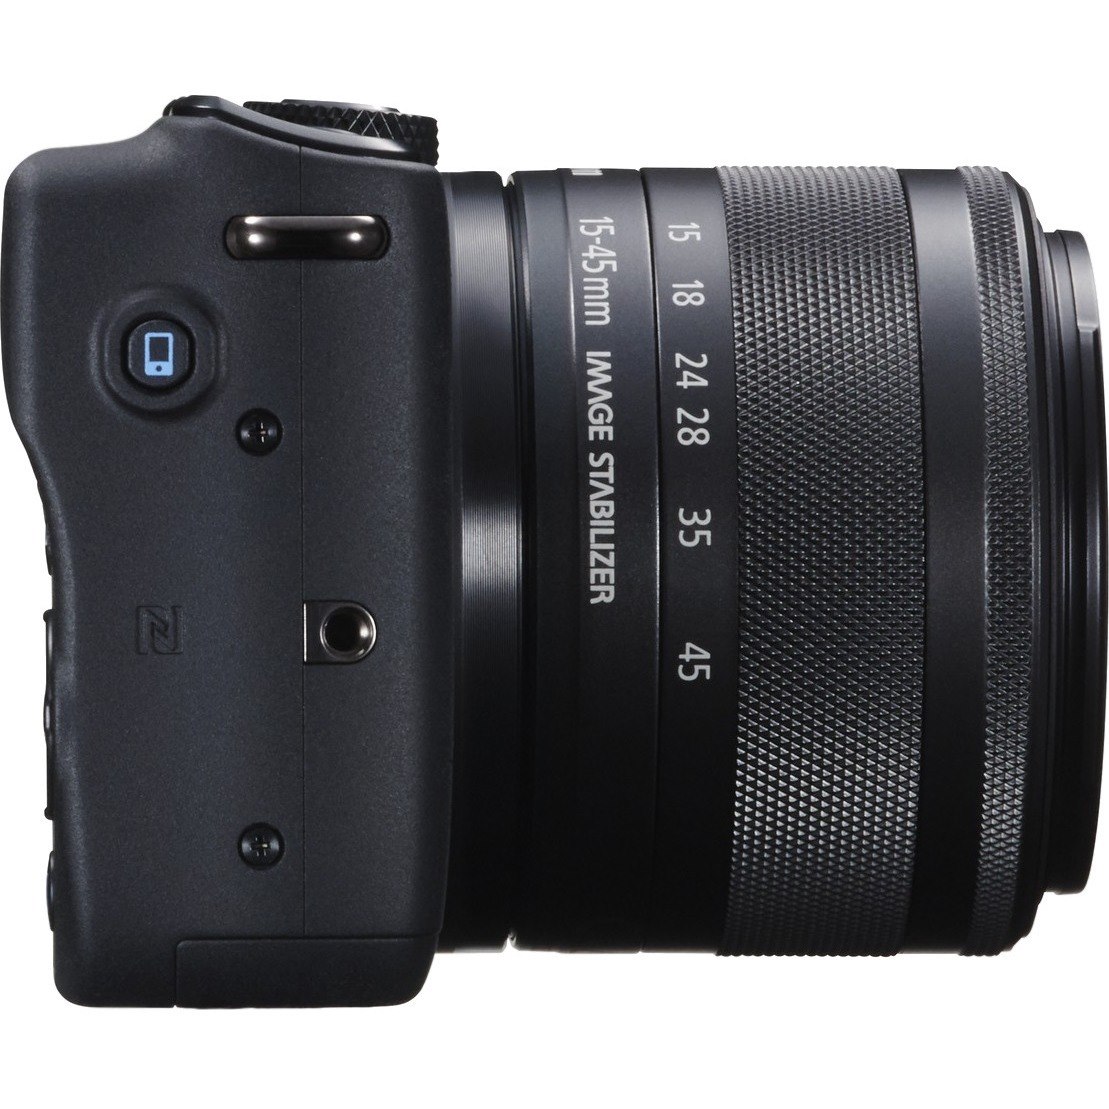 Canon EOS M10 18 Megapixel Mirrorless Camera with Lens - 0.59" - 1.77" - Black